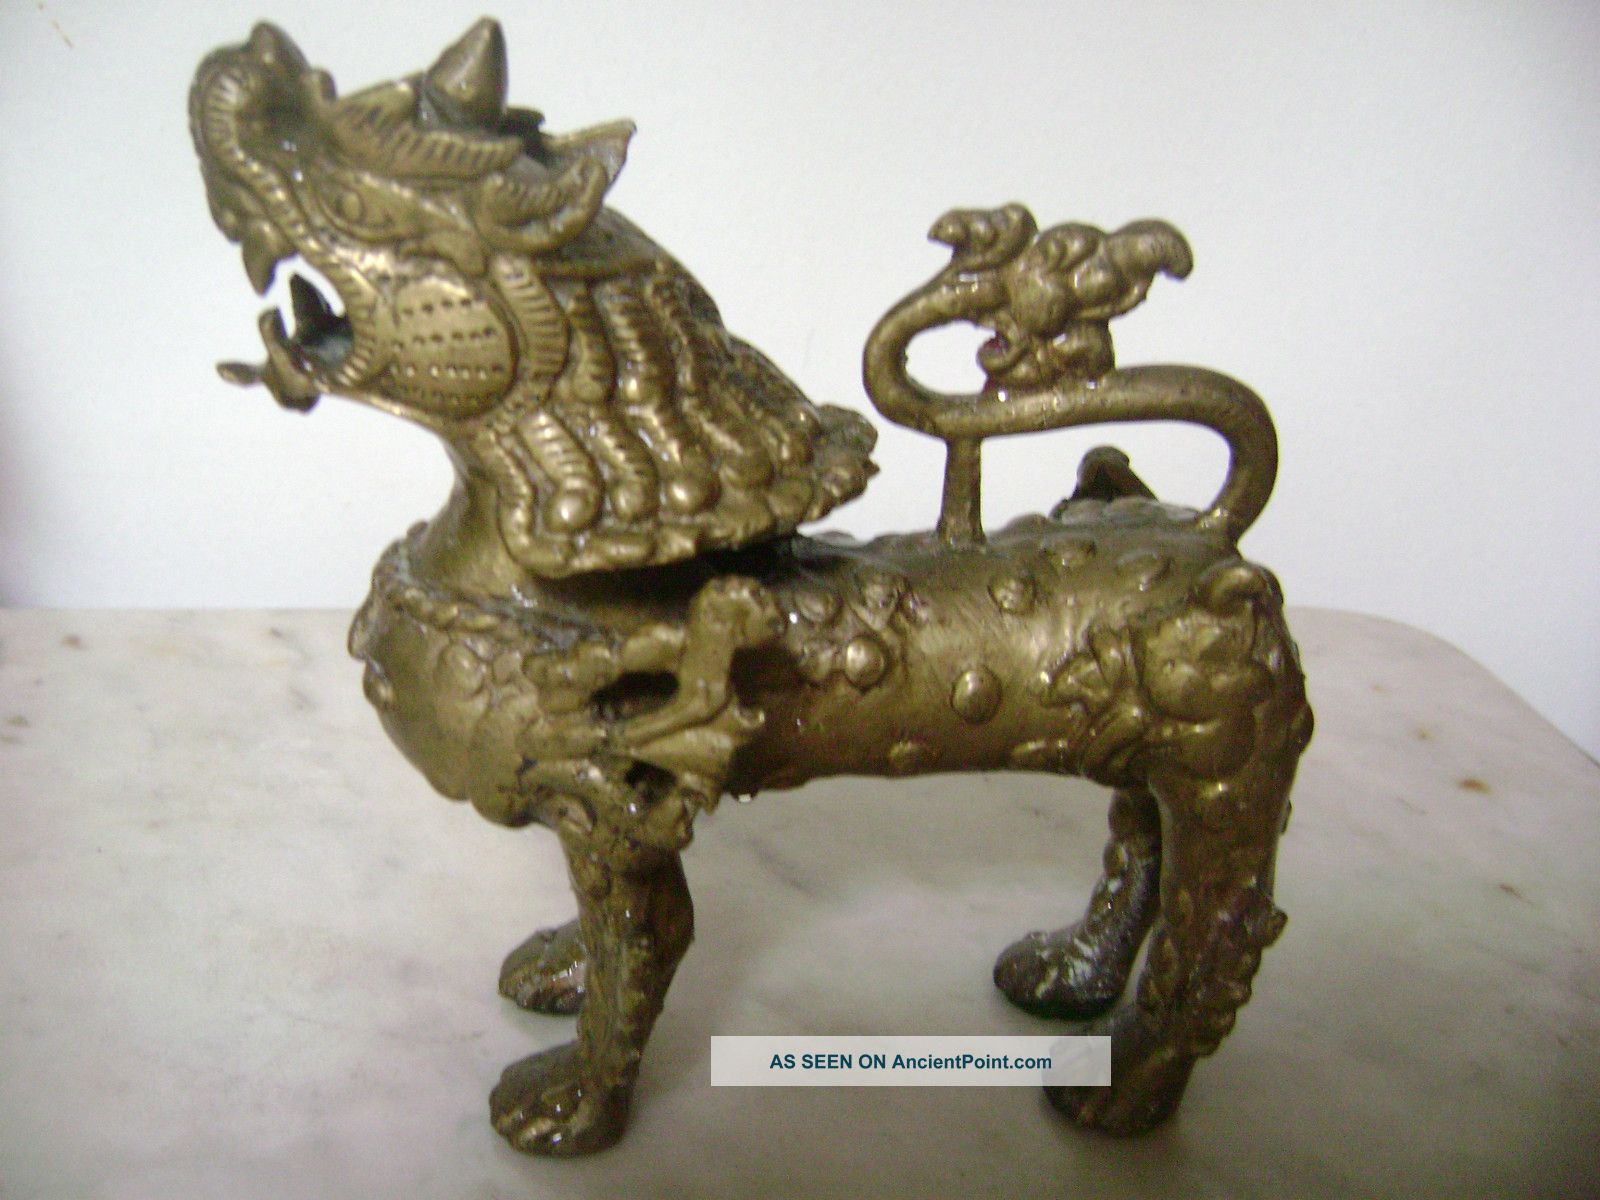 Chinese Imperial Dog: Chinese Vintageasianchineseimperialfufoodogliondragonbrass Breed